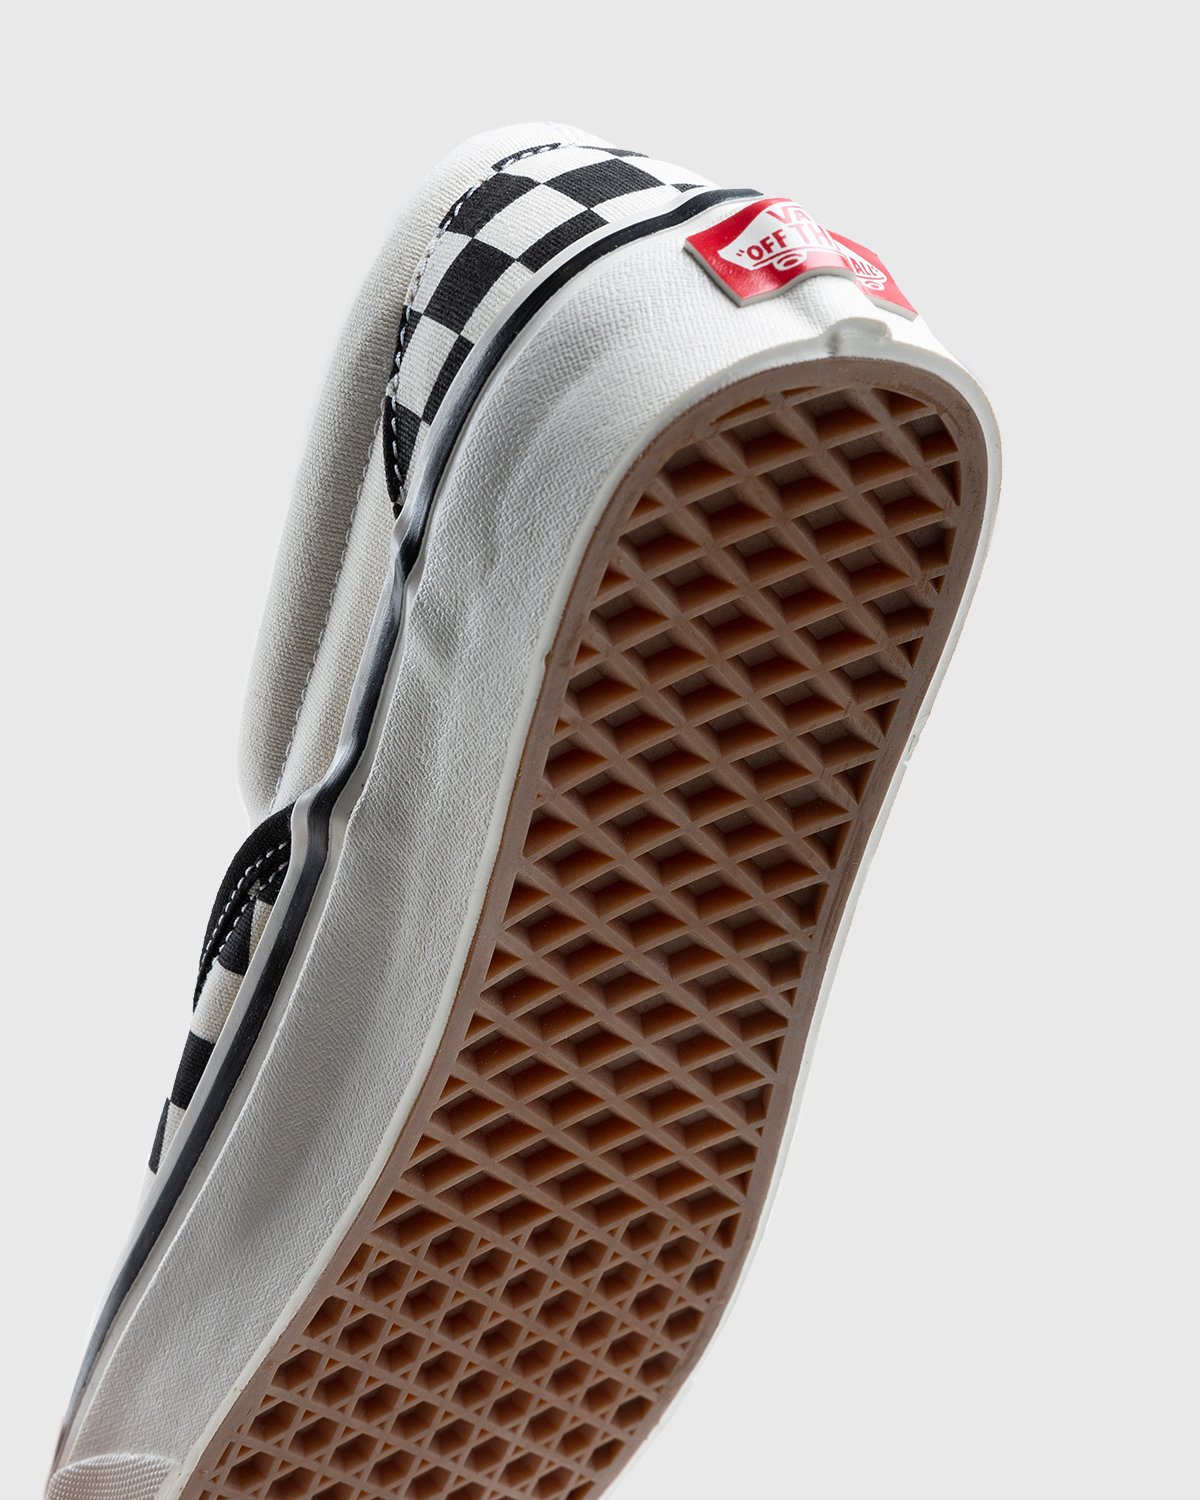 Vans - Anaheim Factory Classic Slip-On 98 DX Checkerboard - Footwear - White - Image 5